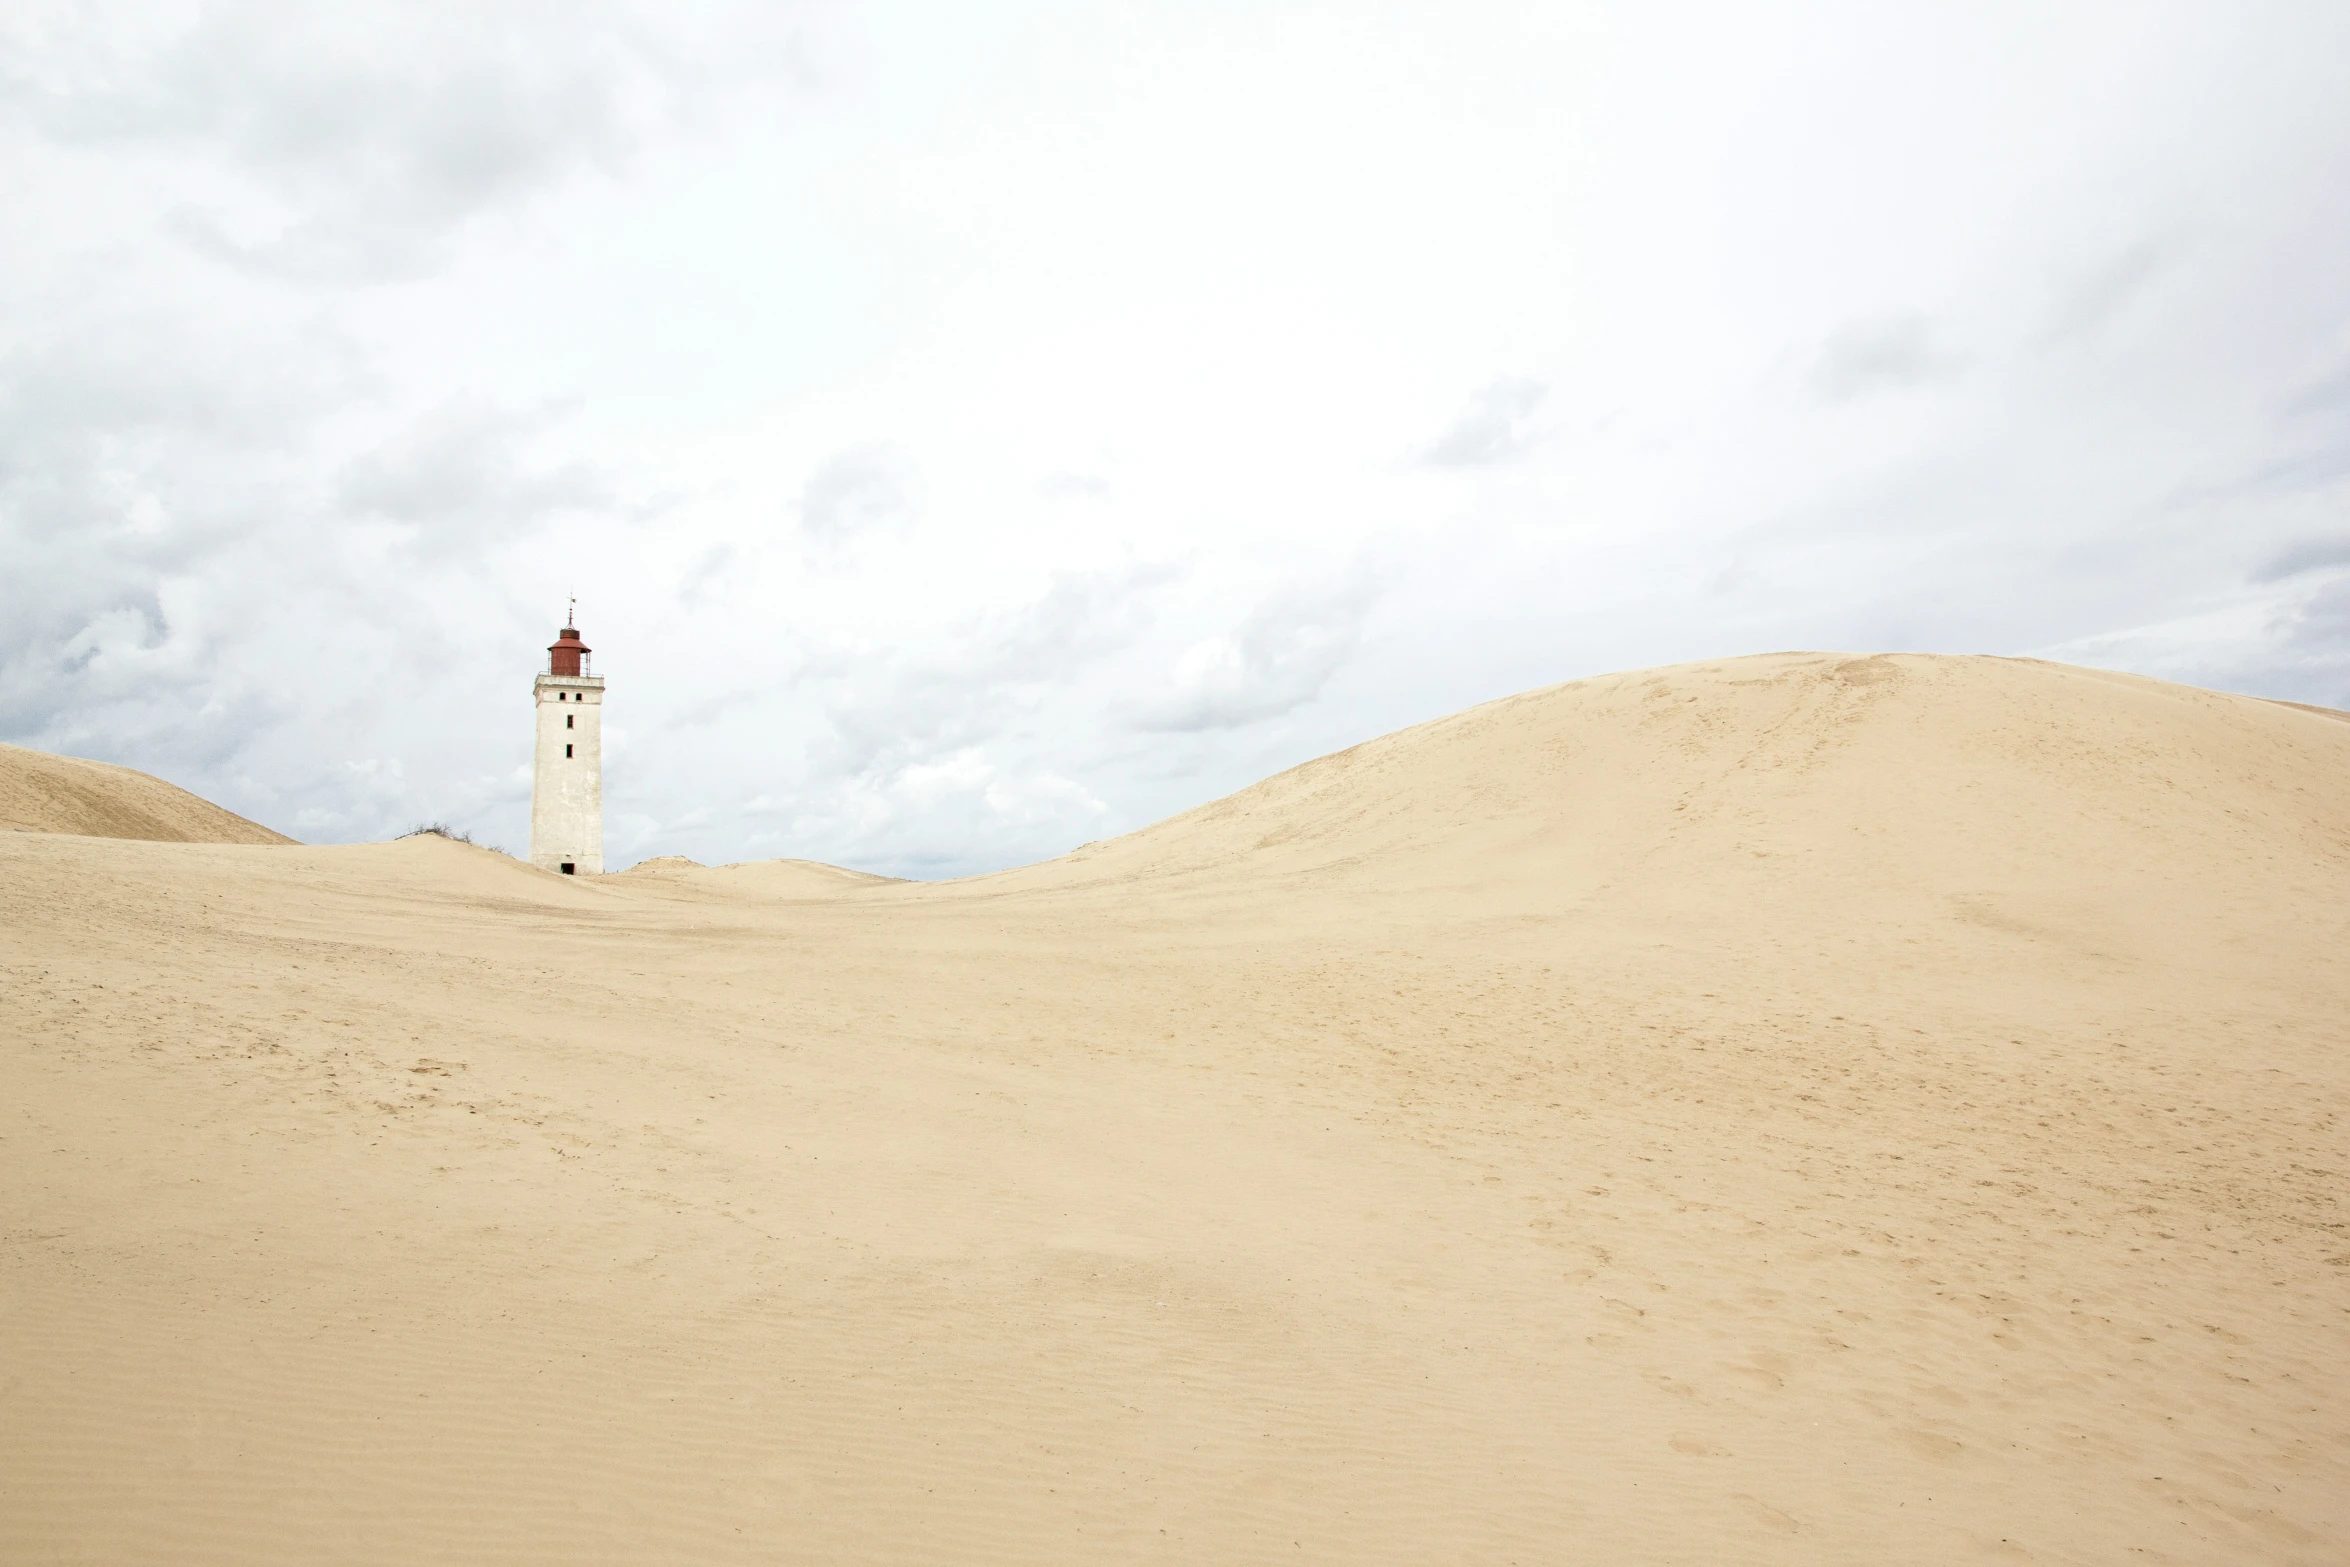 a tall light tower in the sand near a sky